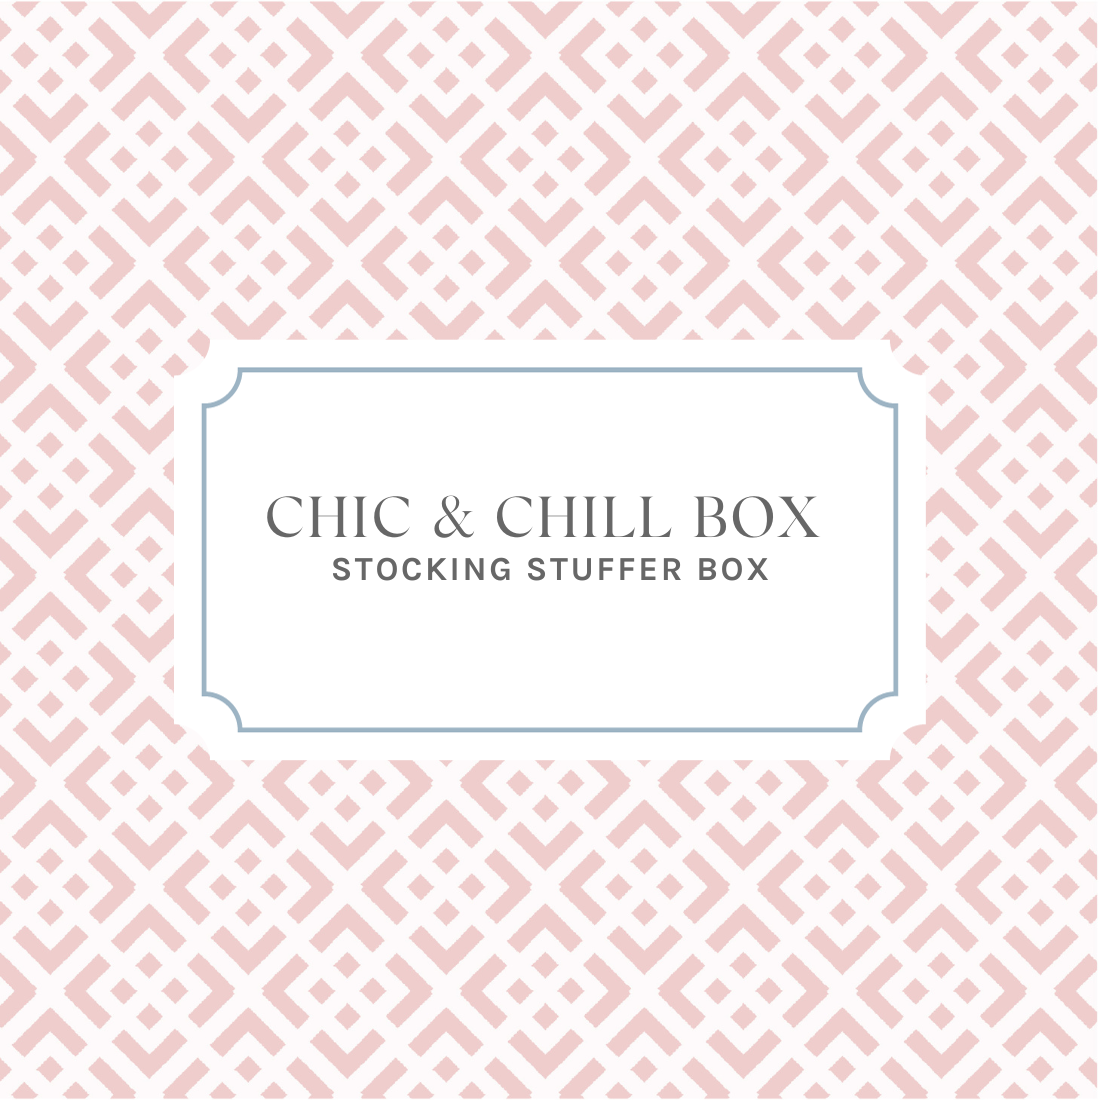 The Chic & Chill Box